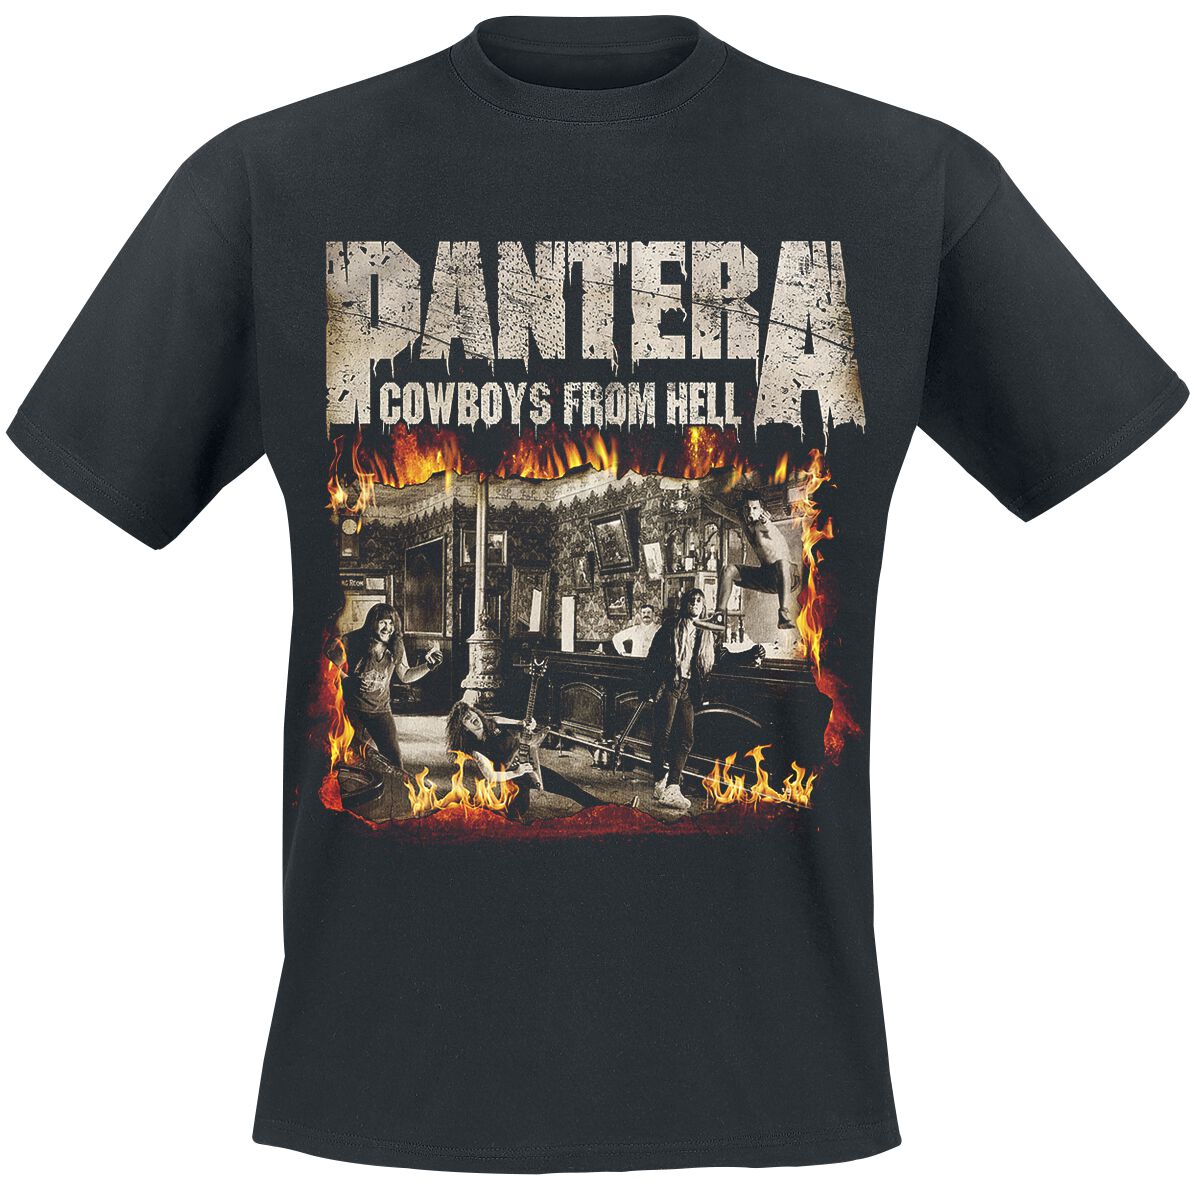 Pantera T-Shirt - Cowboys From Hell - Fire Frame - S bis XXL - für Männer - Größe XXL - schwarz  - Lizenziertes Merchandise!